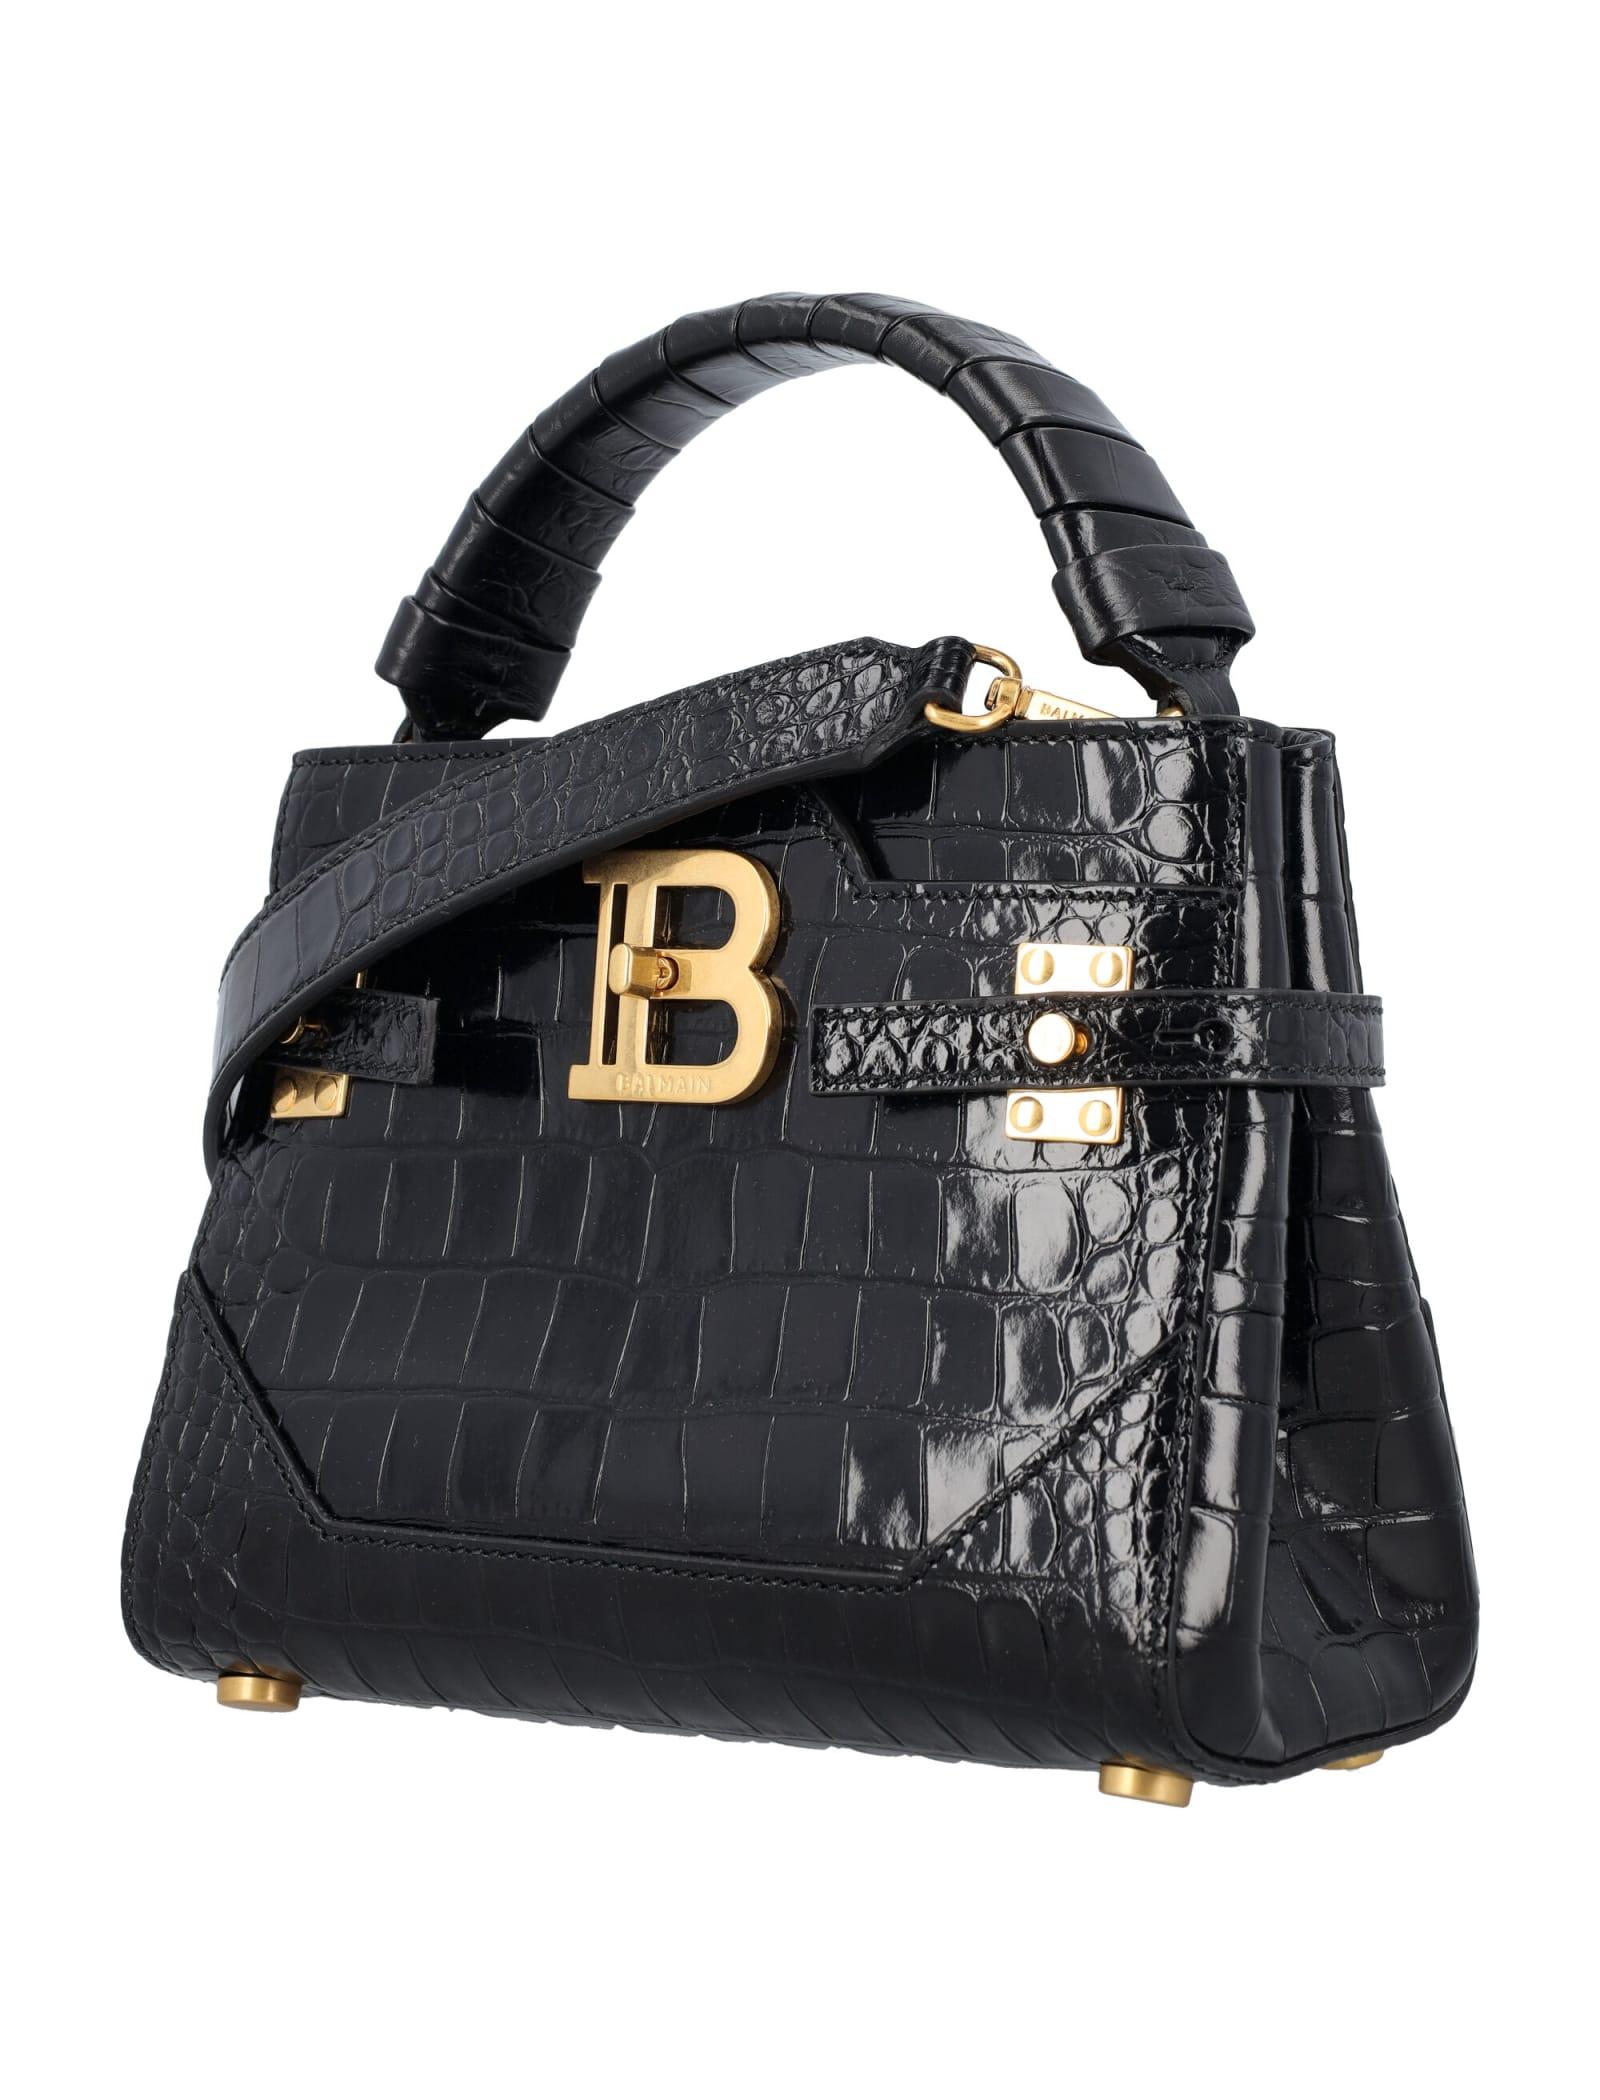 B-Buzz 22 Top Handle leather bag black - Women